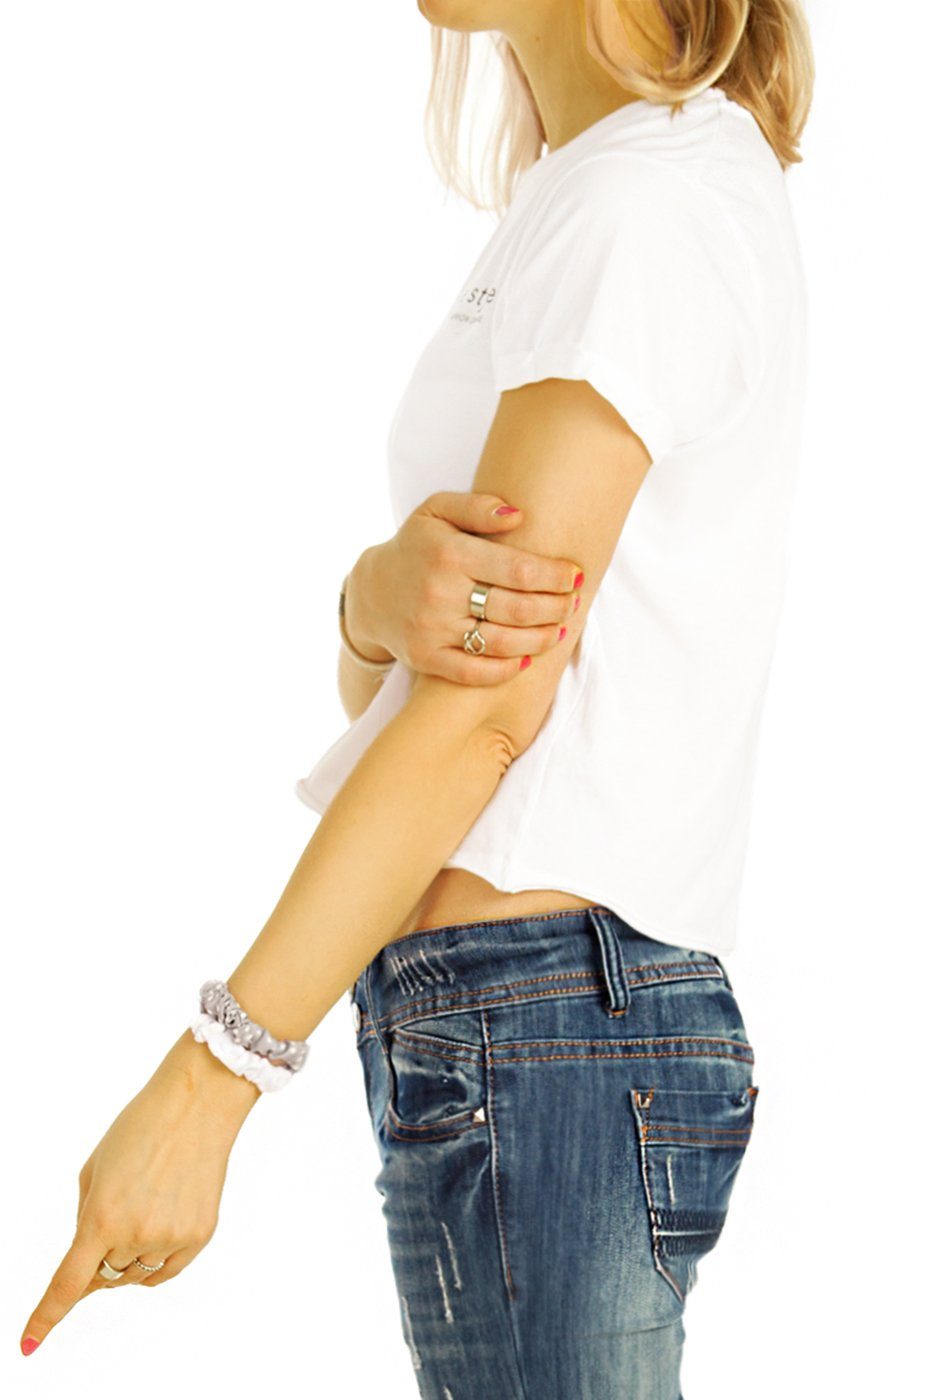 grau be Straight-Jeans geschnittene gerade waist low j137p-straight styled Hüfthose Damenjeans, 5-pocket